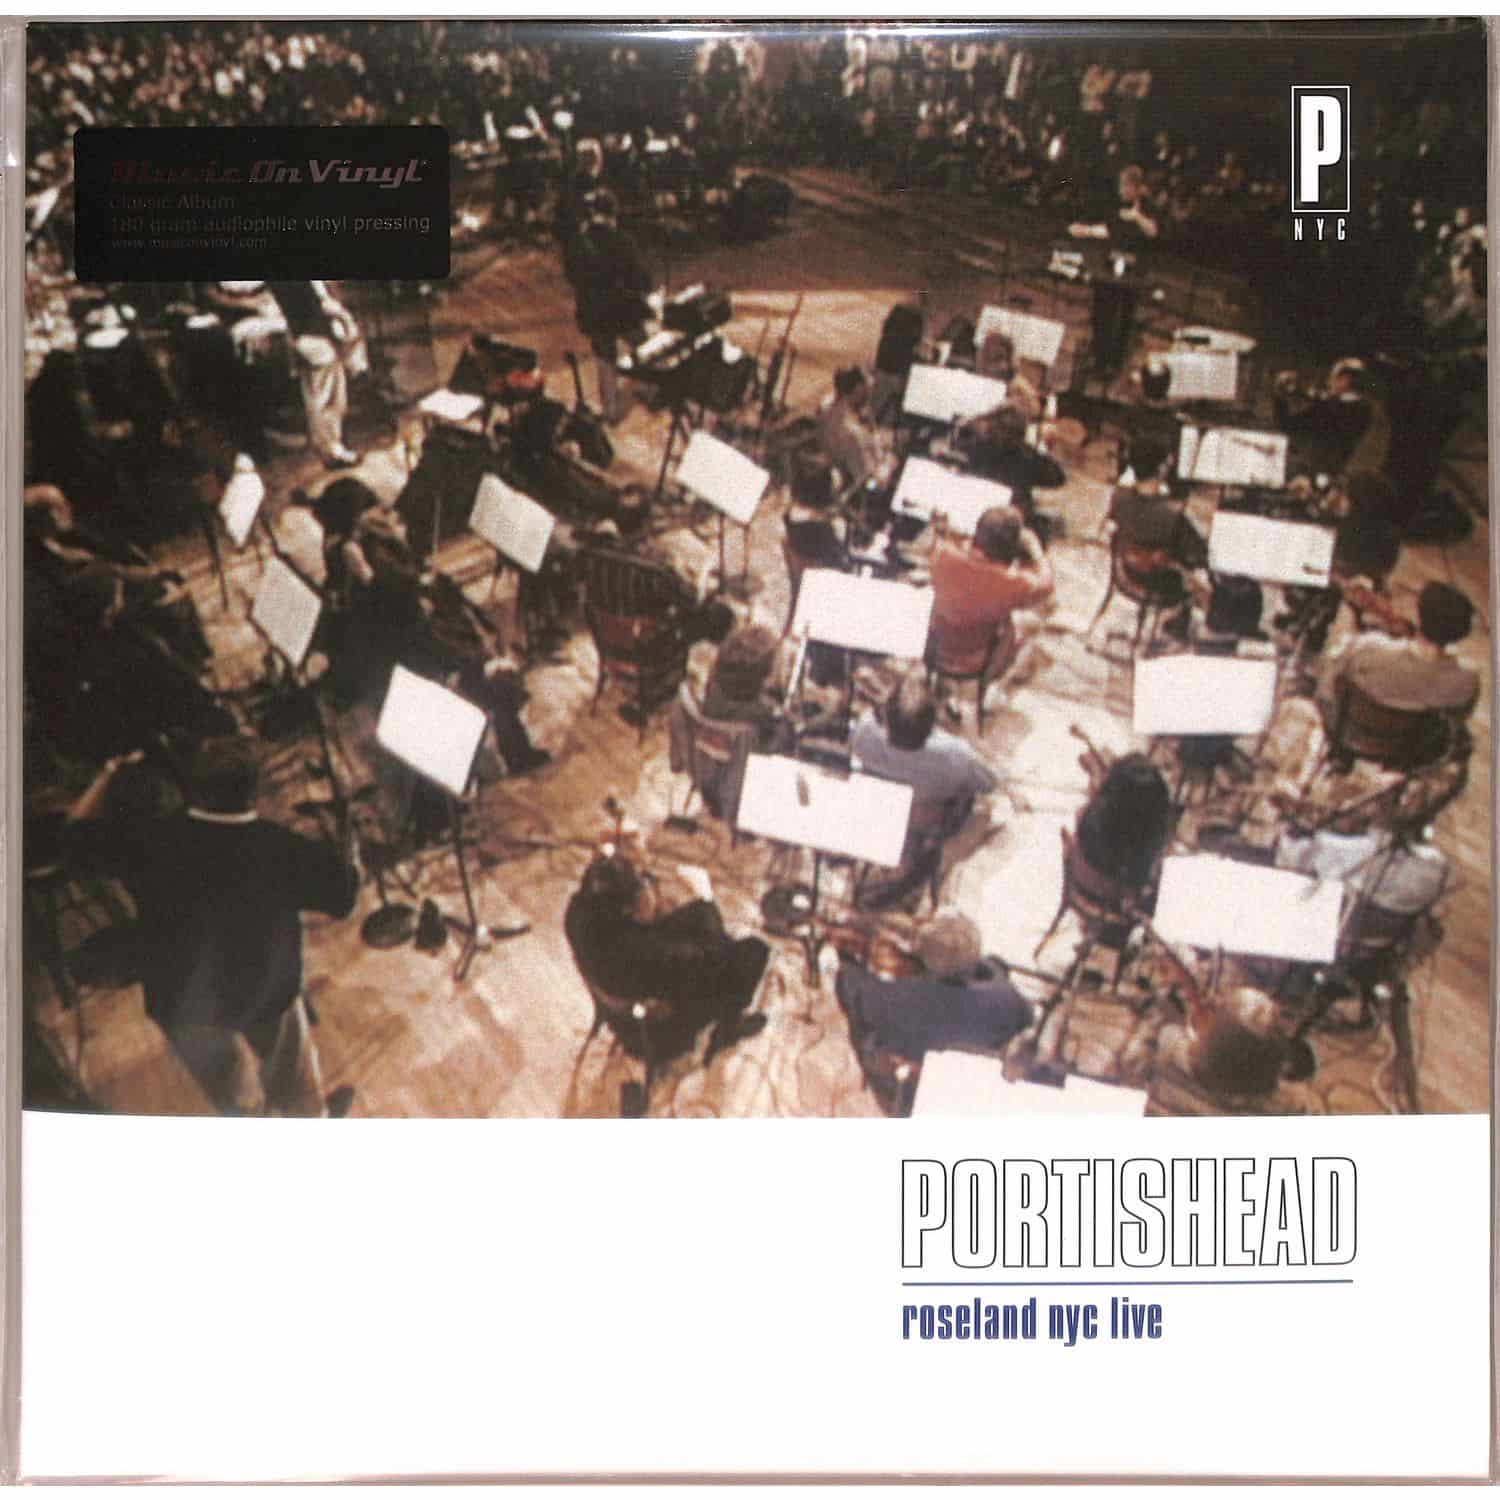 Portishead - roseland nyc live (180g 2x12 lp)